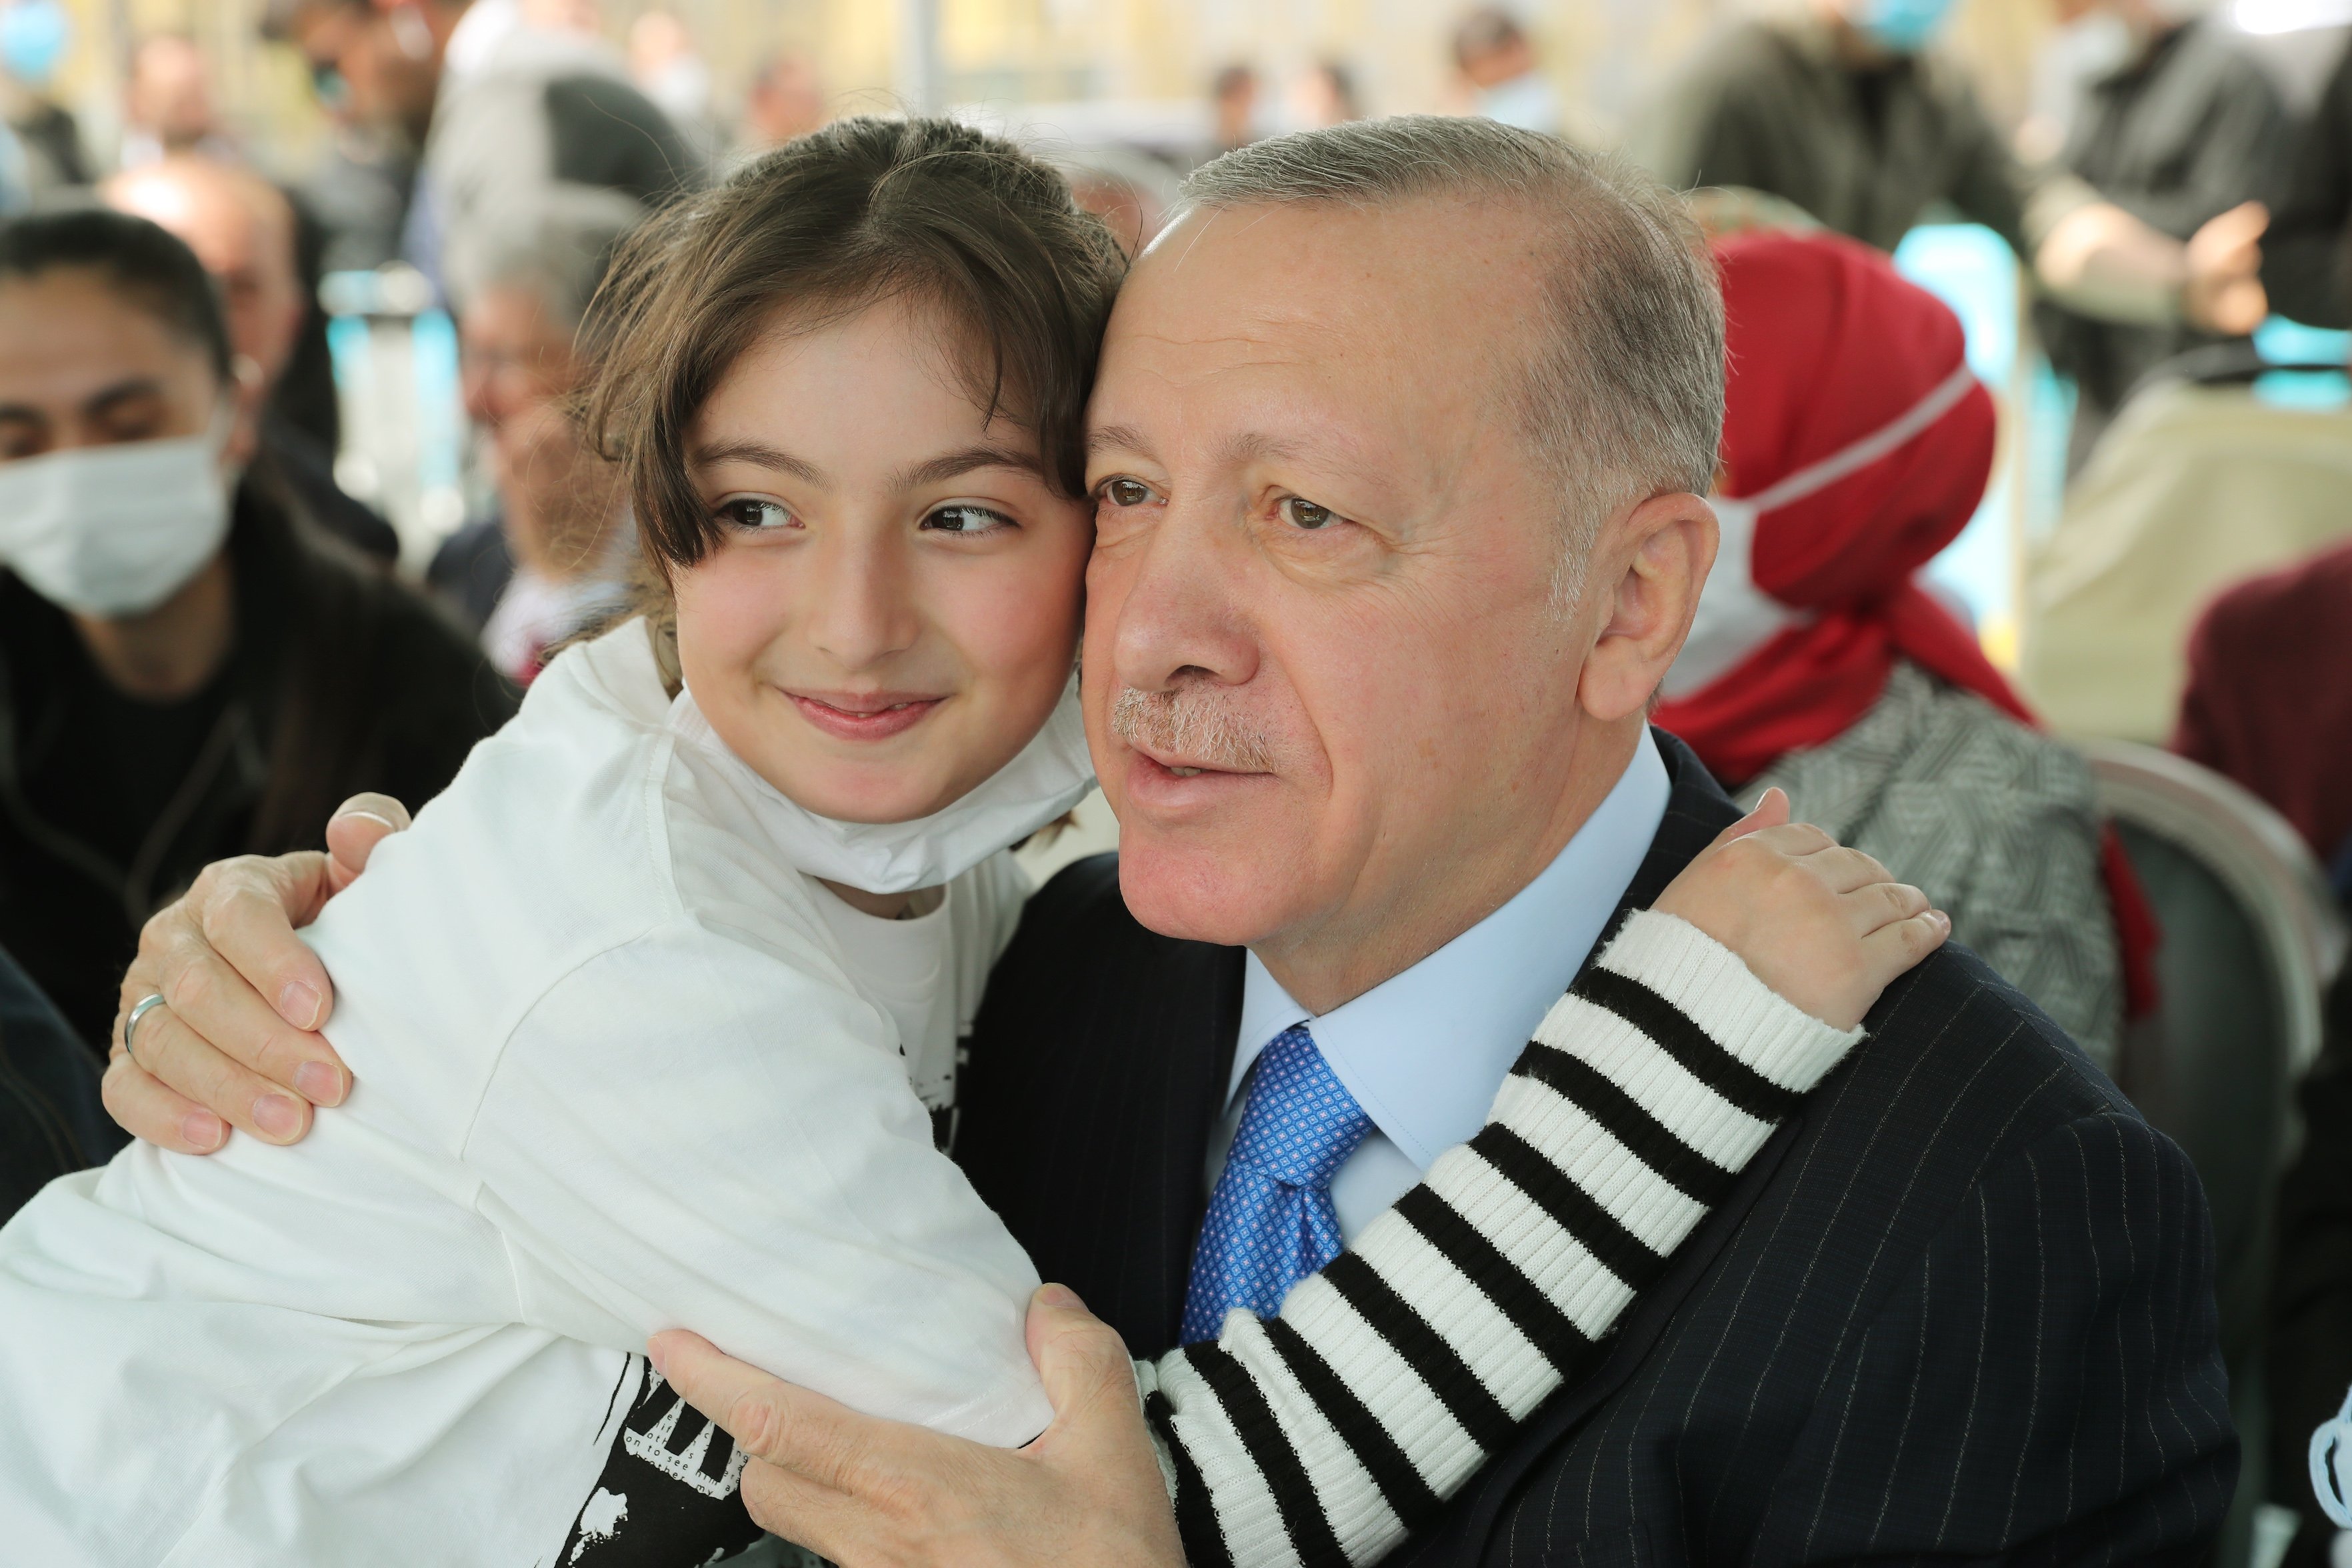 Children are motivation behind our efforts: President Erdoğan | Daily Sabah